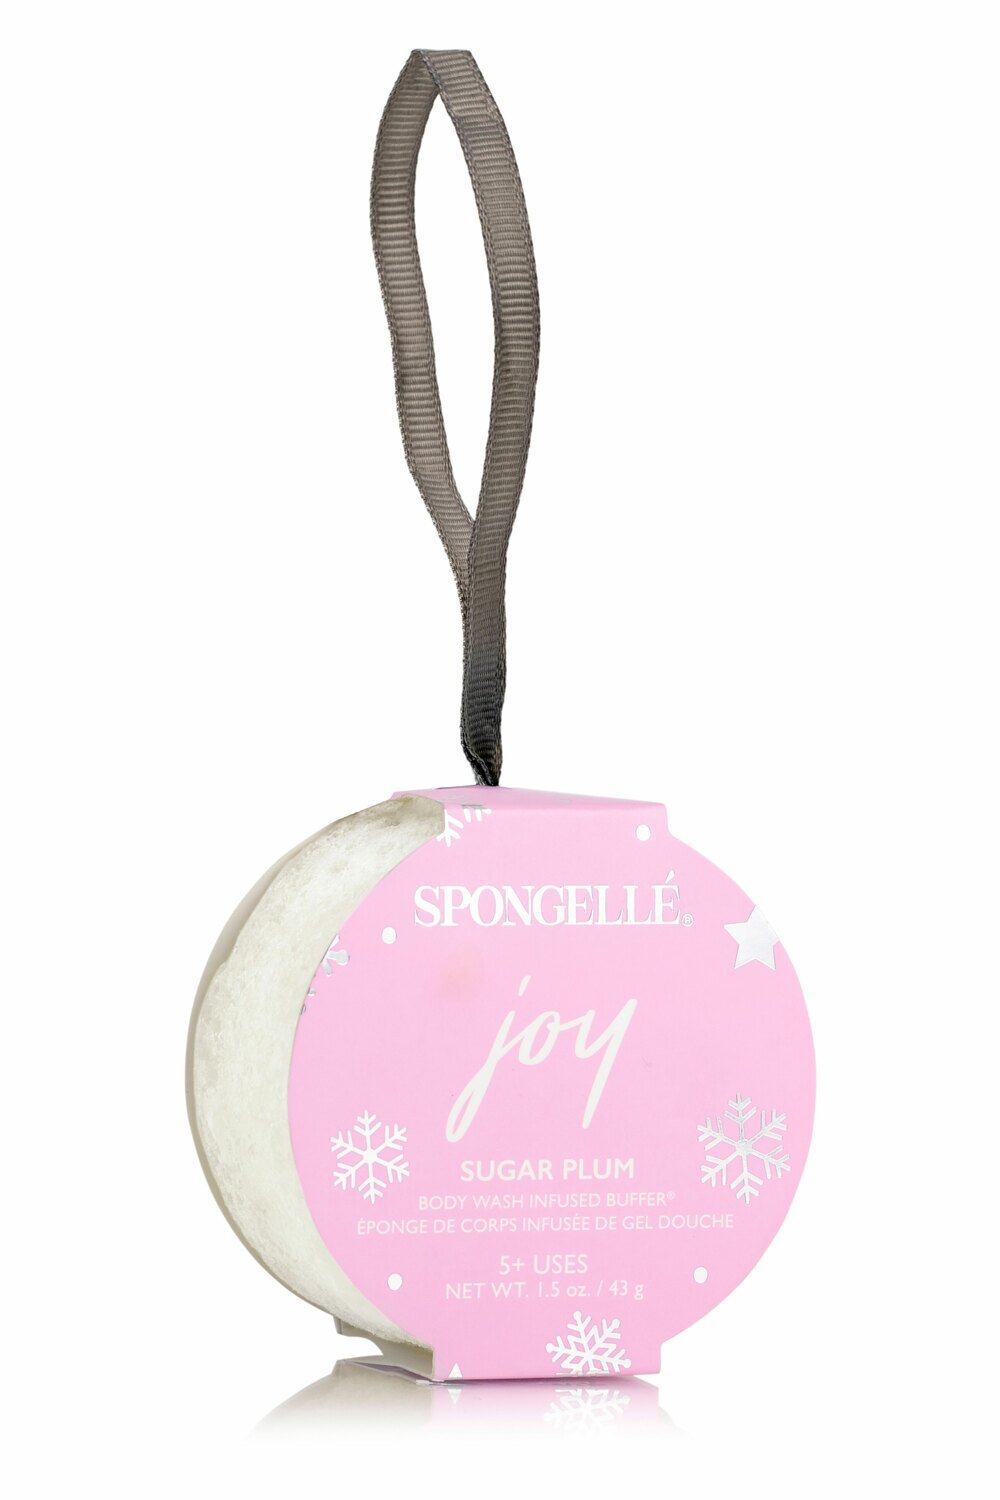 Spongelle Holiday Ornaments Joy Sugar Plum Pink 5+ Washes 1.5Oz Pack of 6 AST-HOSP